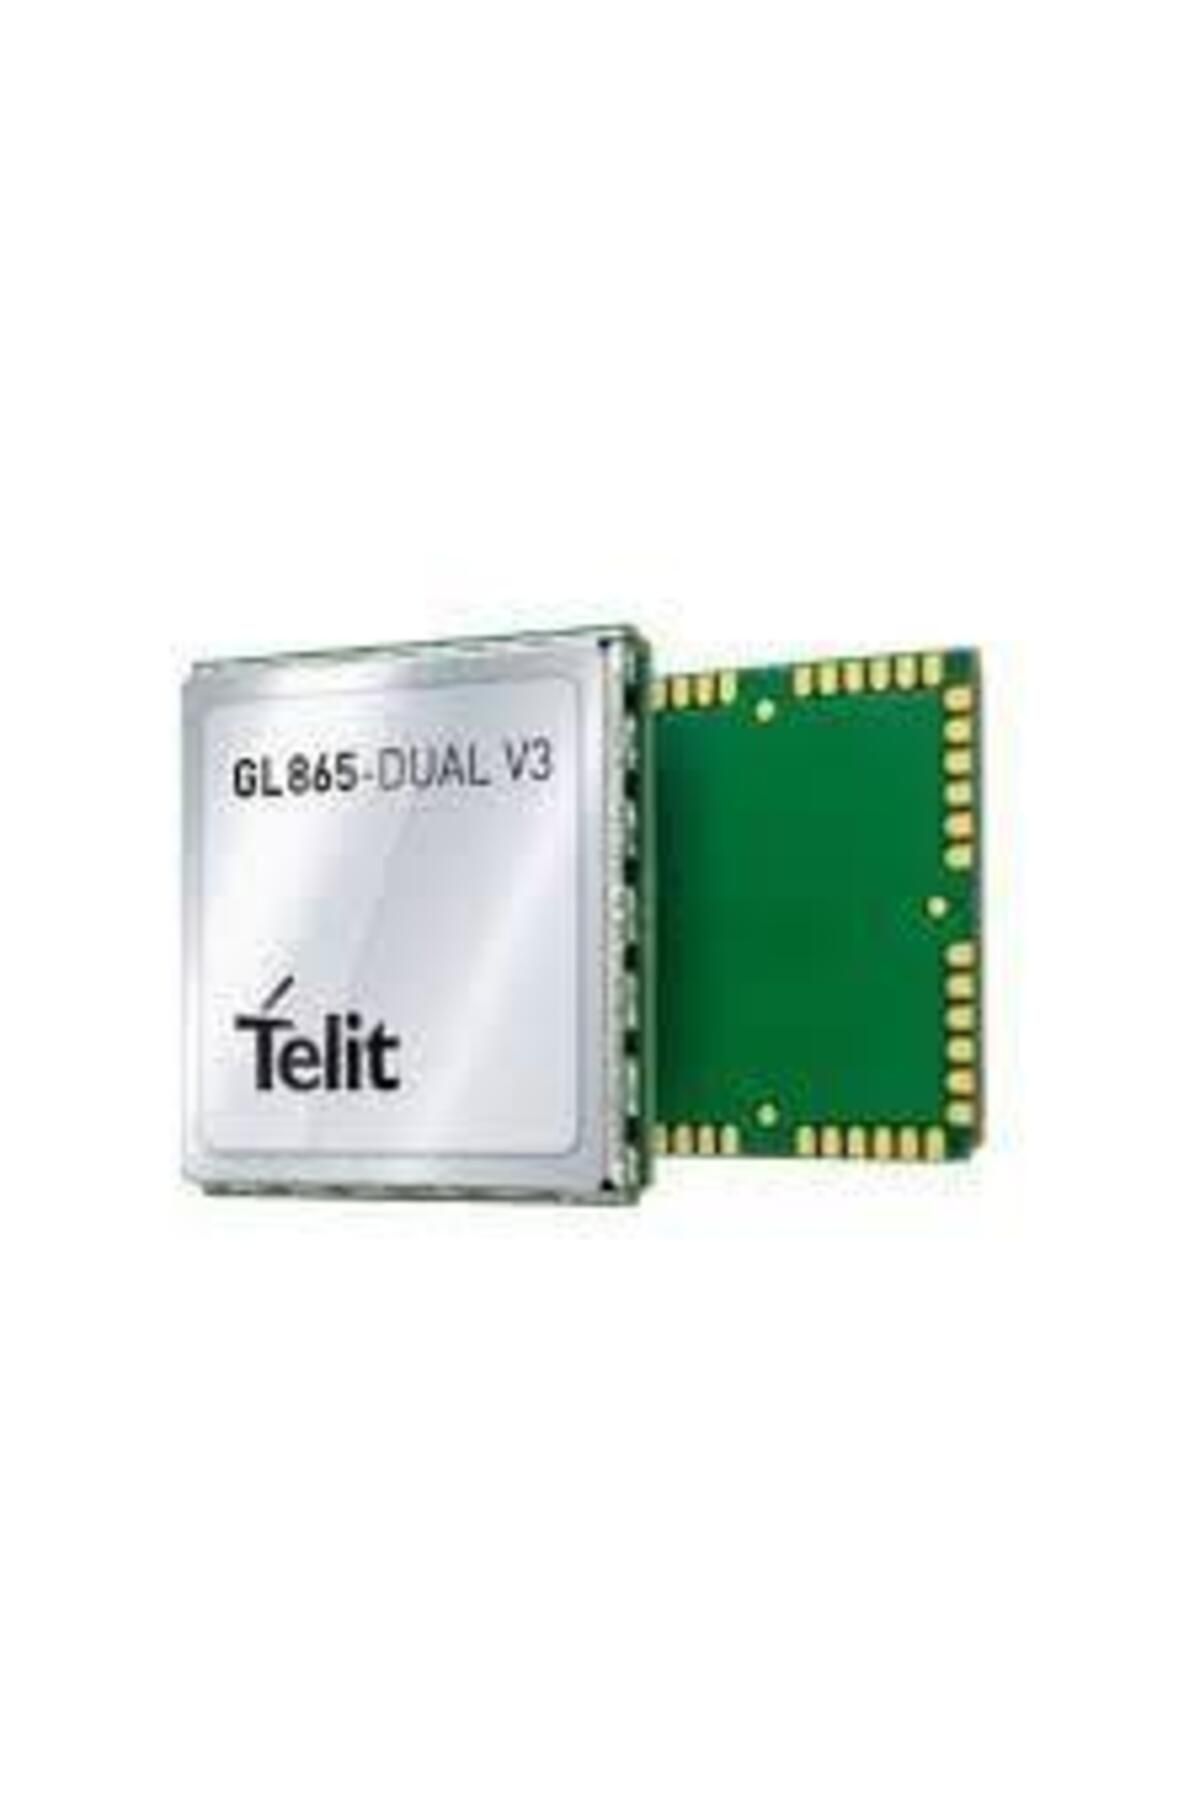 Hasyılmaz Telit Gl865-dual V3.1 Gsm Modül